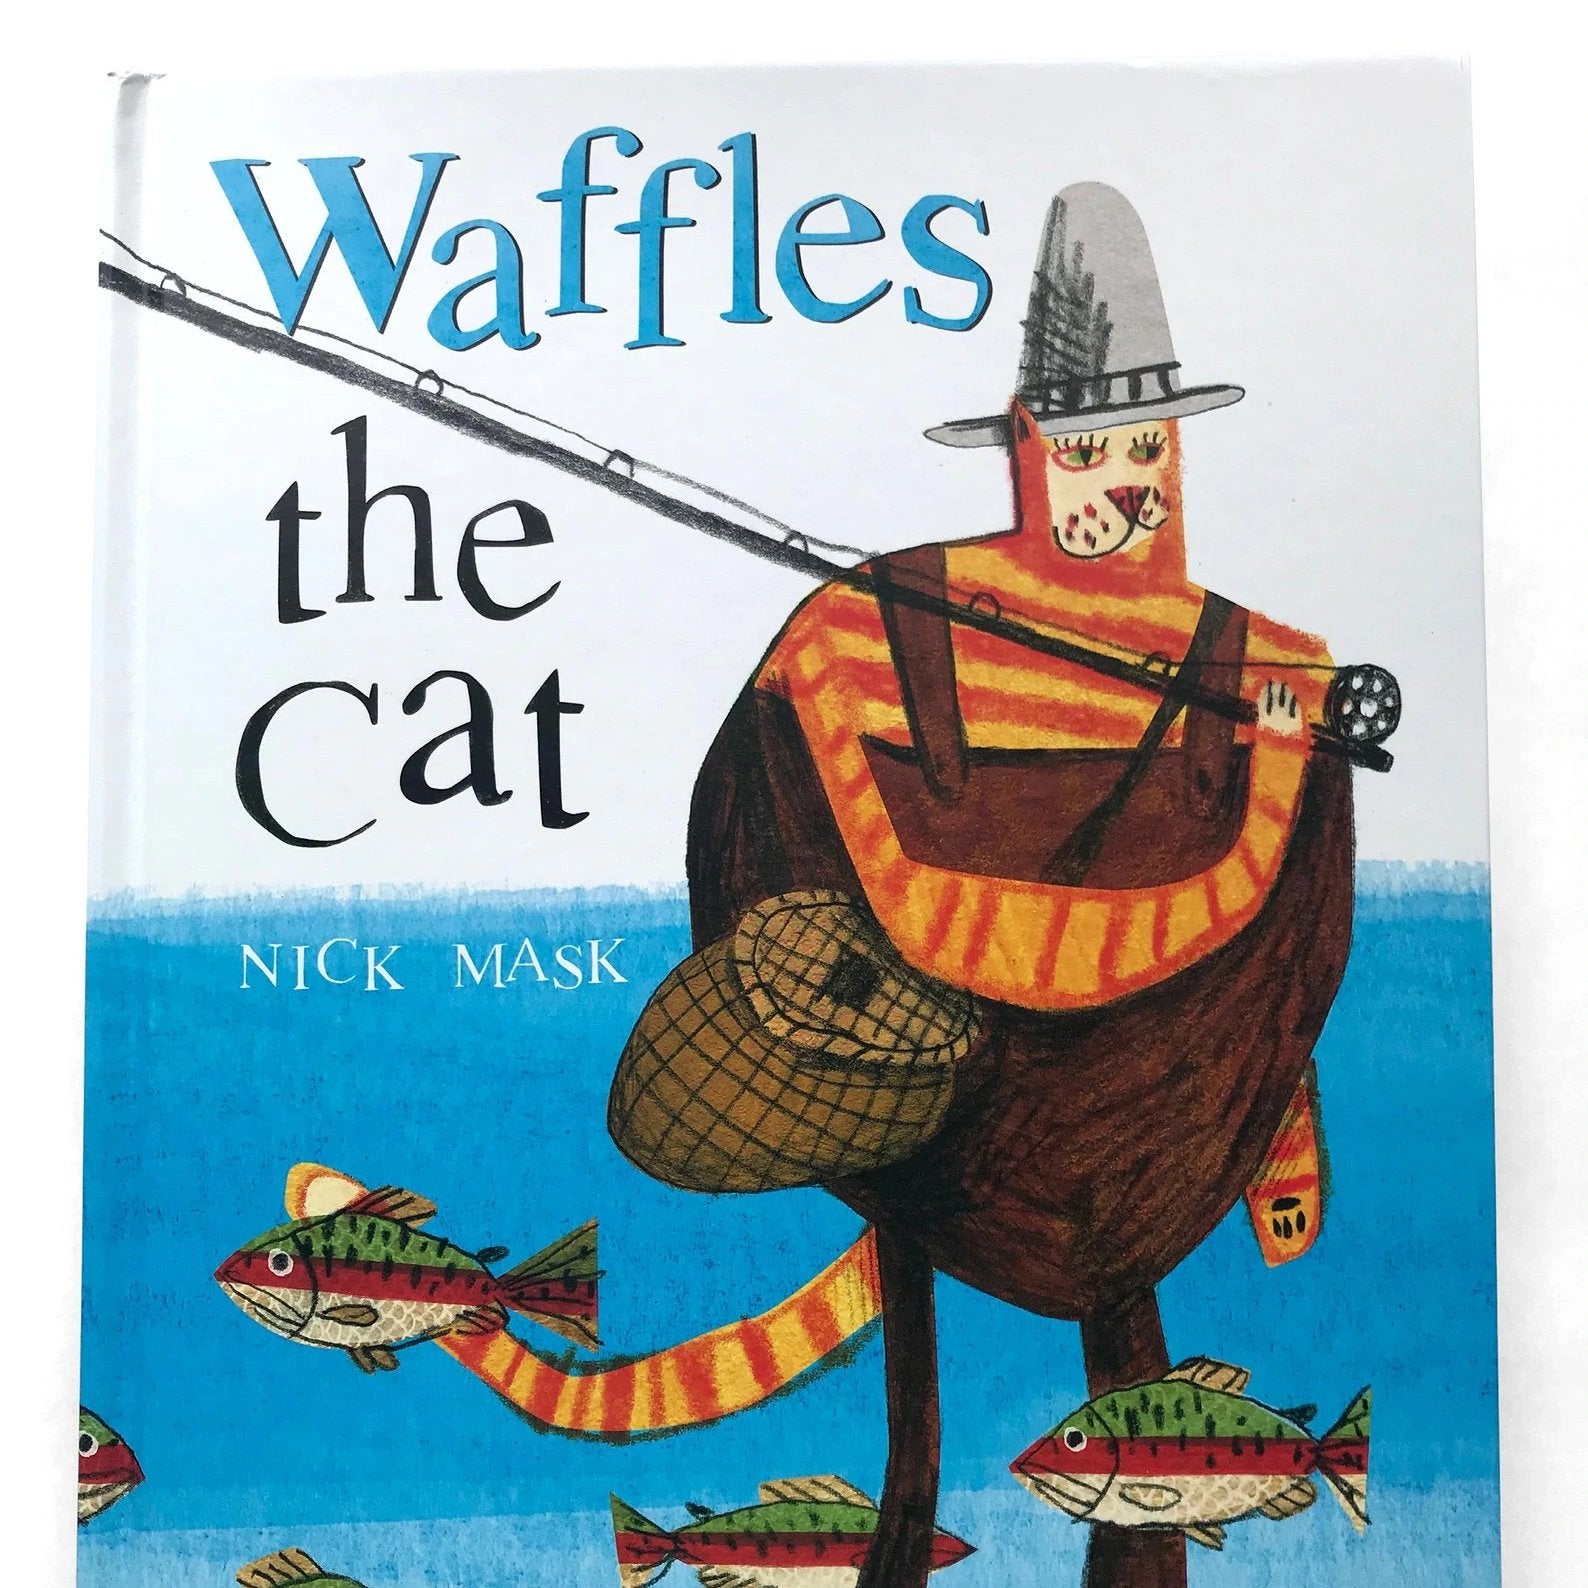 Waffles the Cat